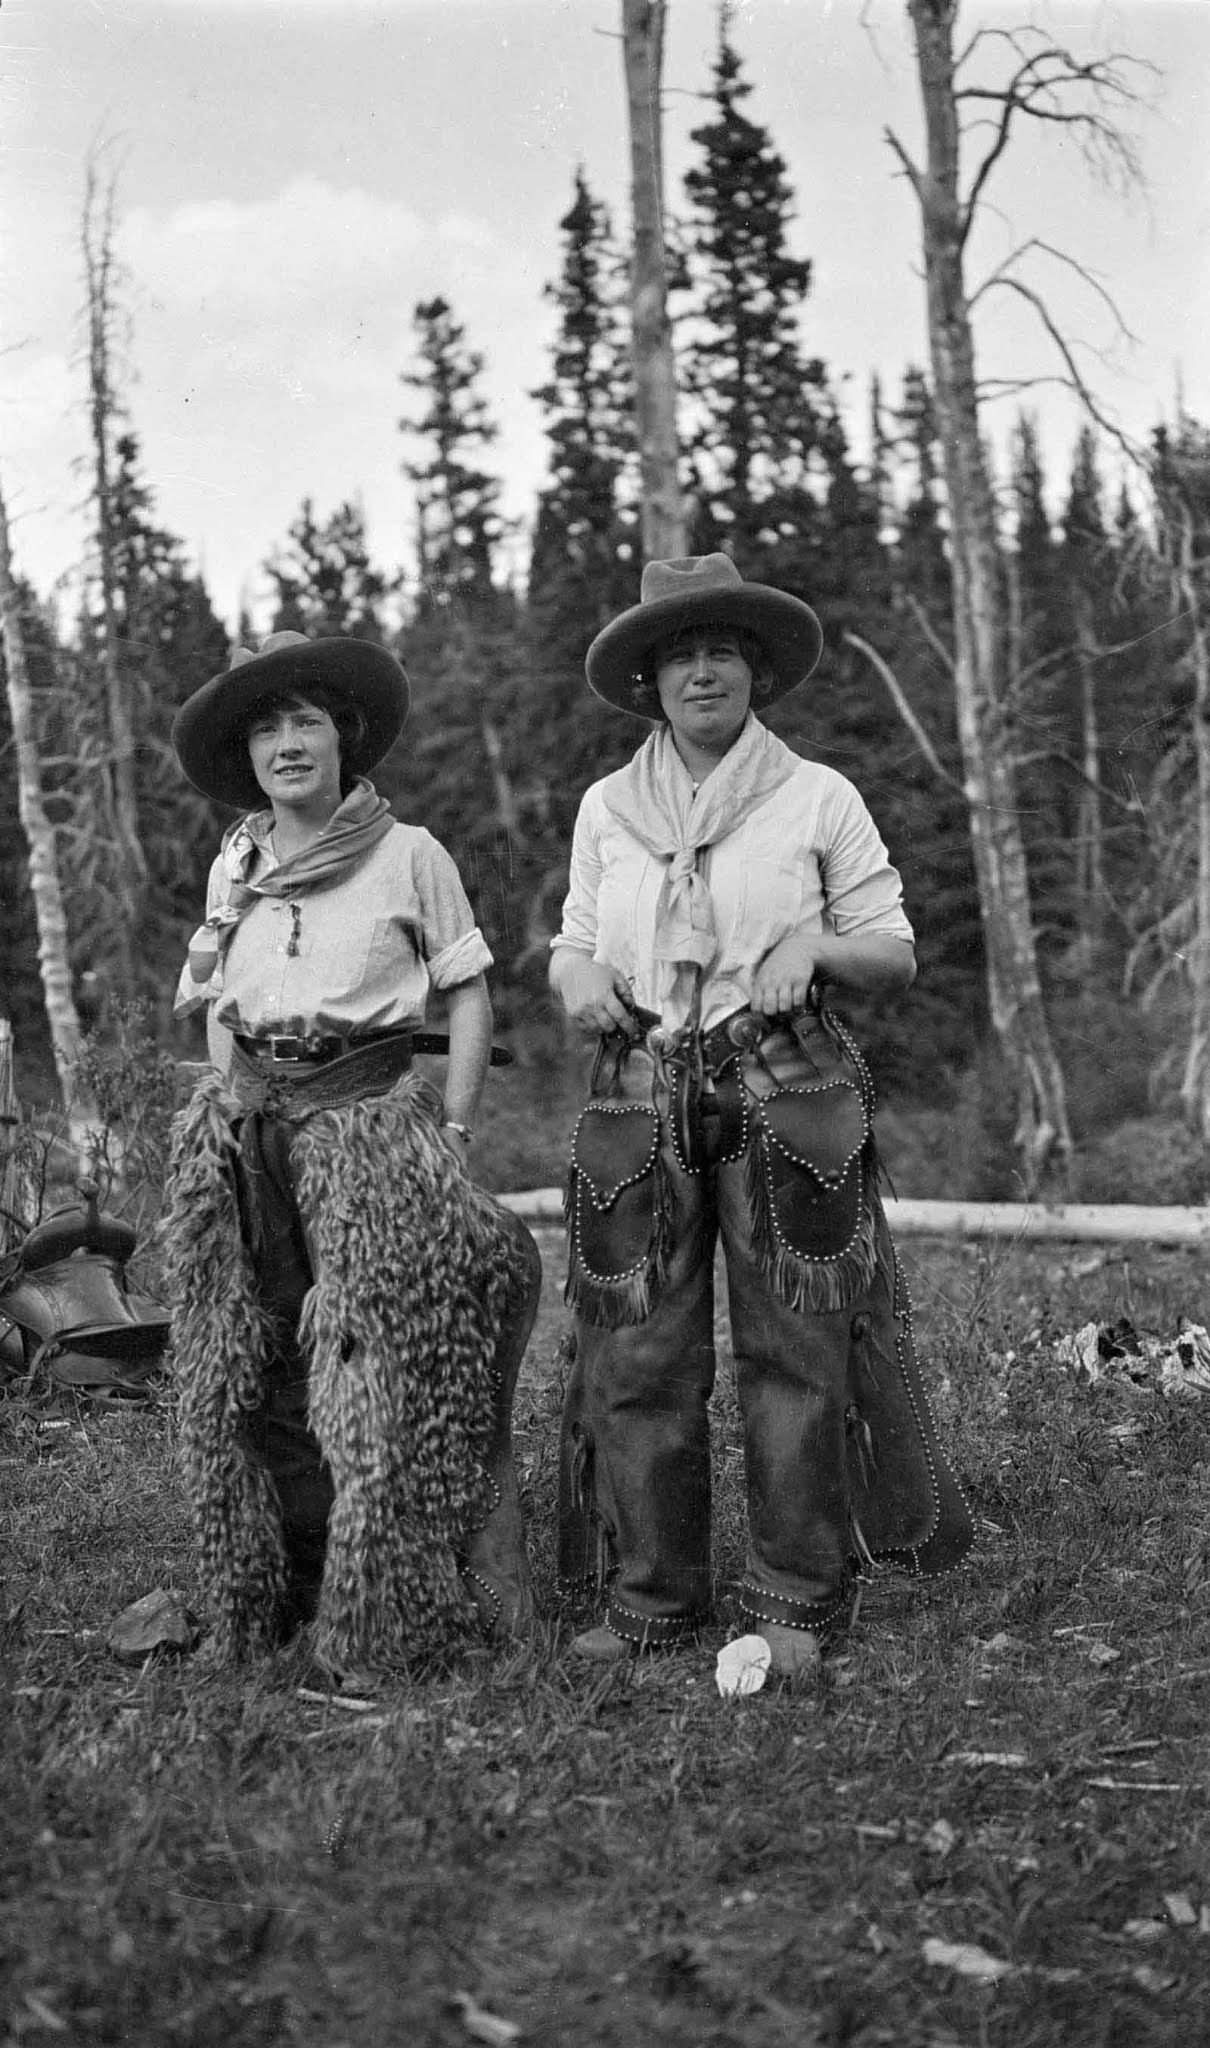 “Ladies in Chaps”, c.1920.